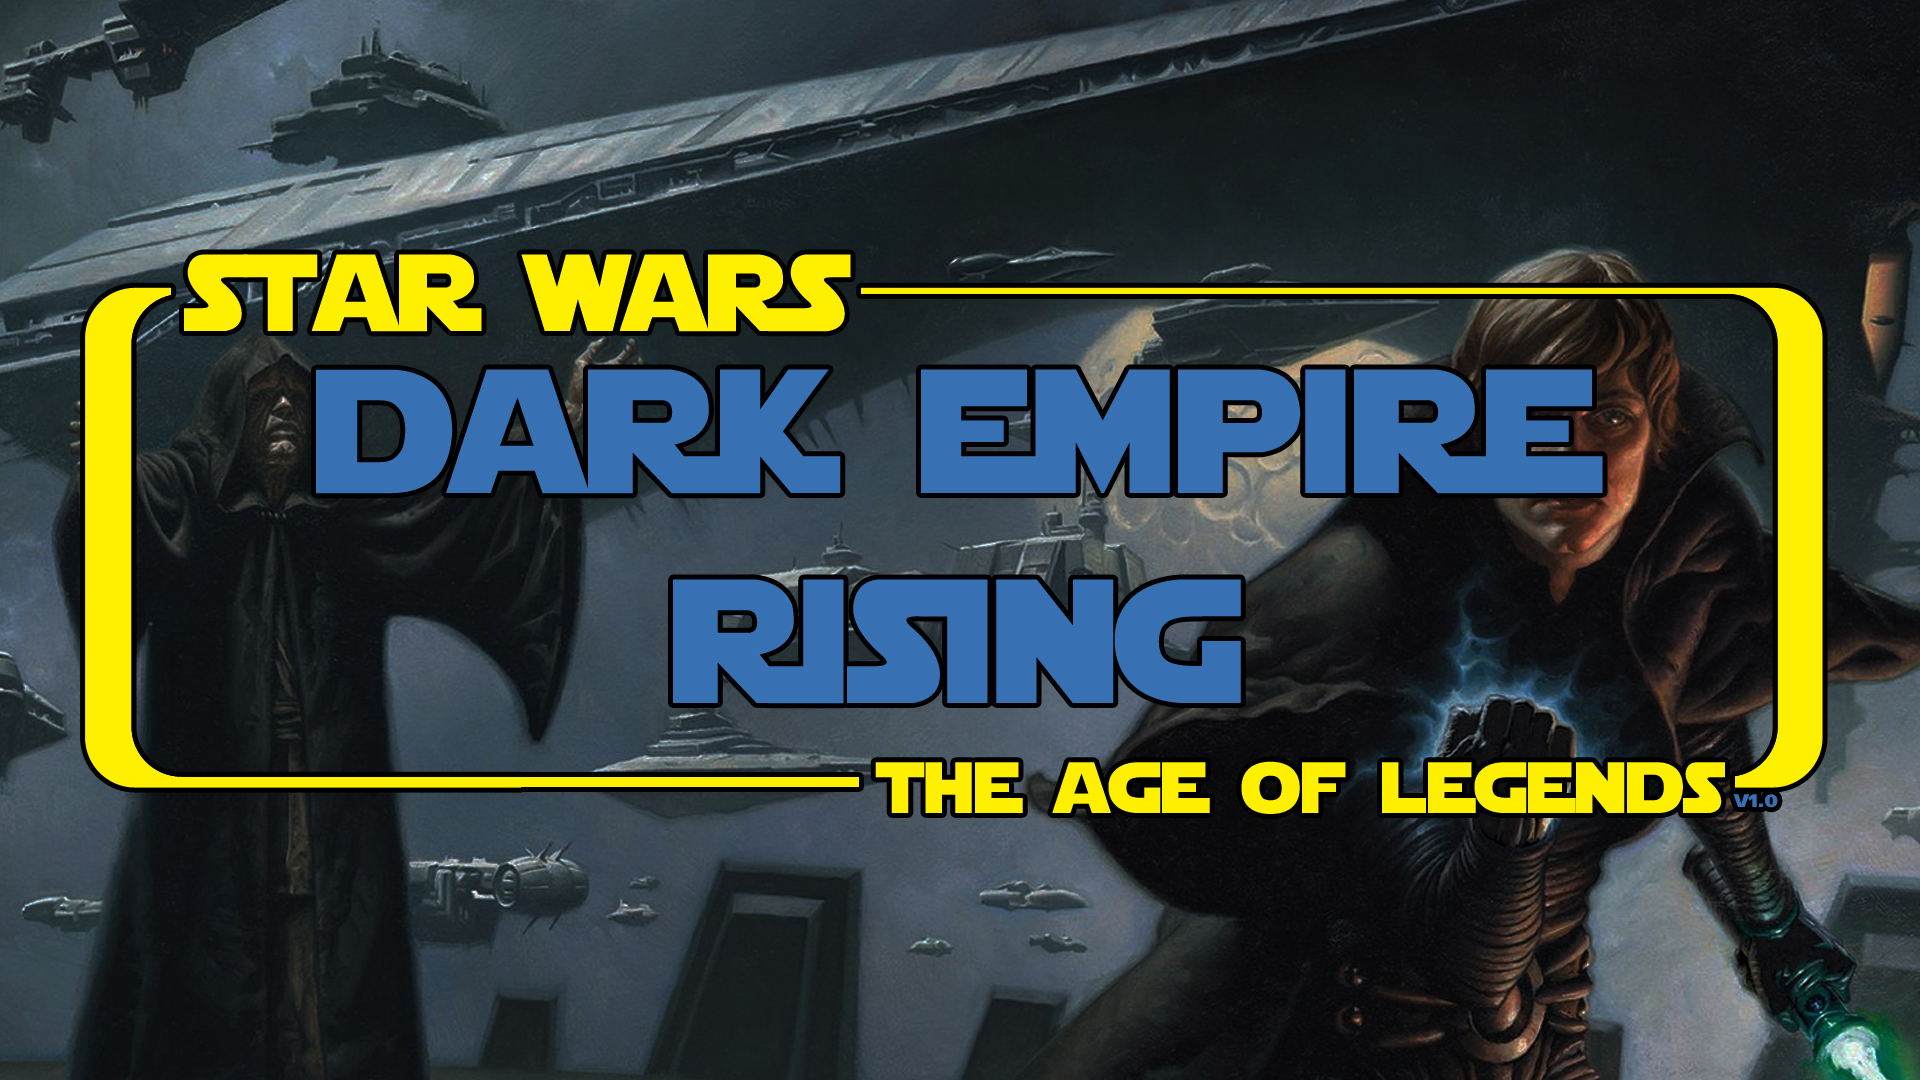 Dark Empire Rising